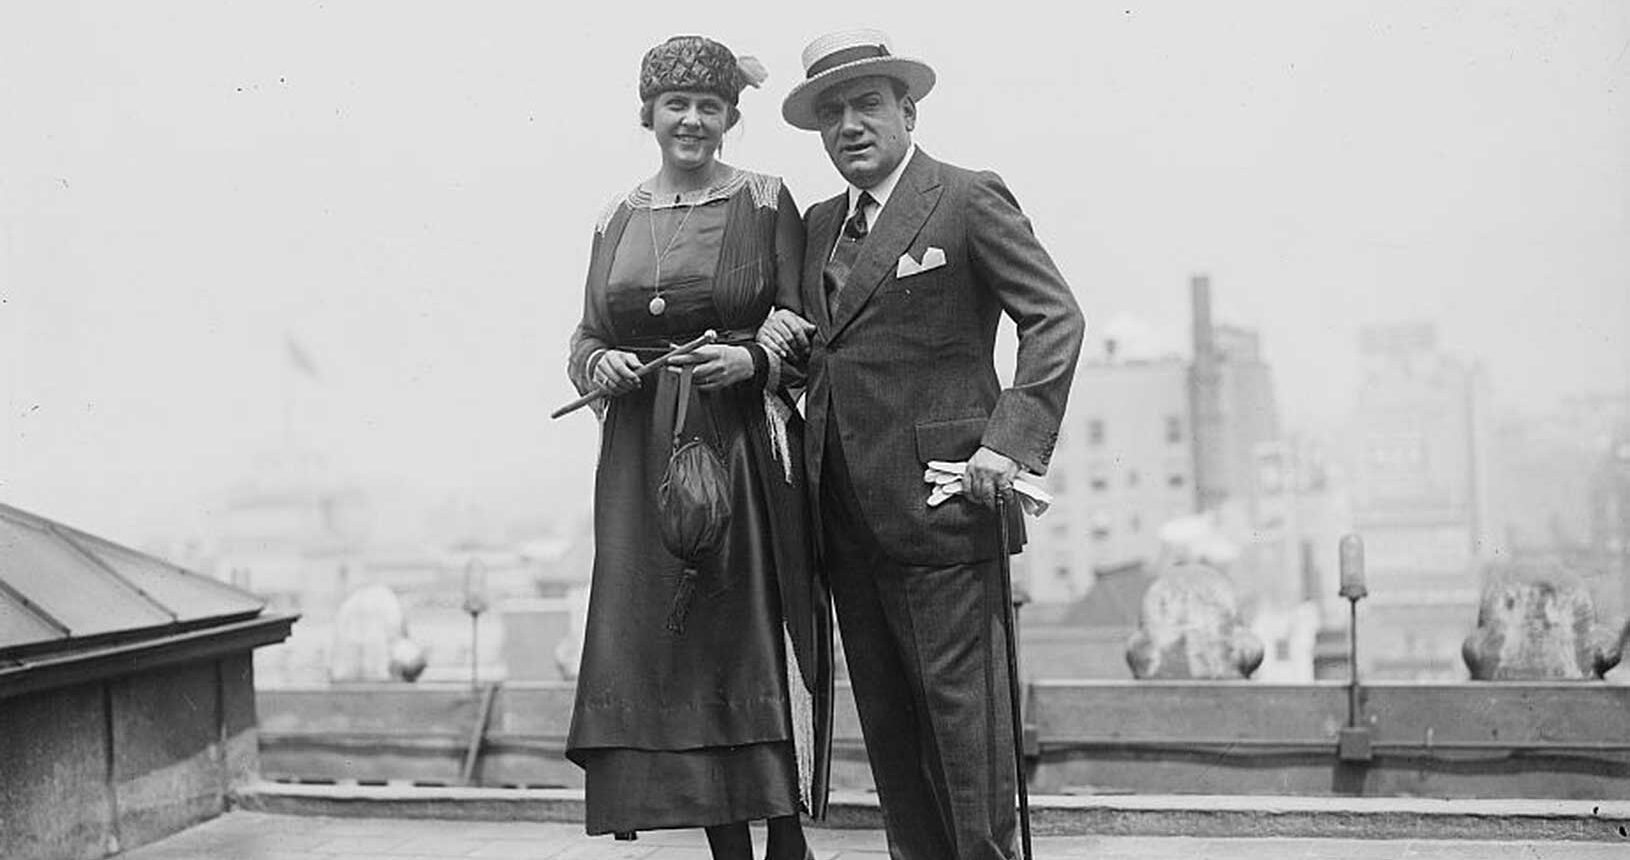 Enrico Caruso (1873-1921) mit seiner Frau Dorothy 1918 auf dem Dach des Hotels Knickerbocker in New York, Library of Congress Washington (USA) - Public Domain